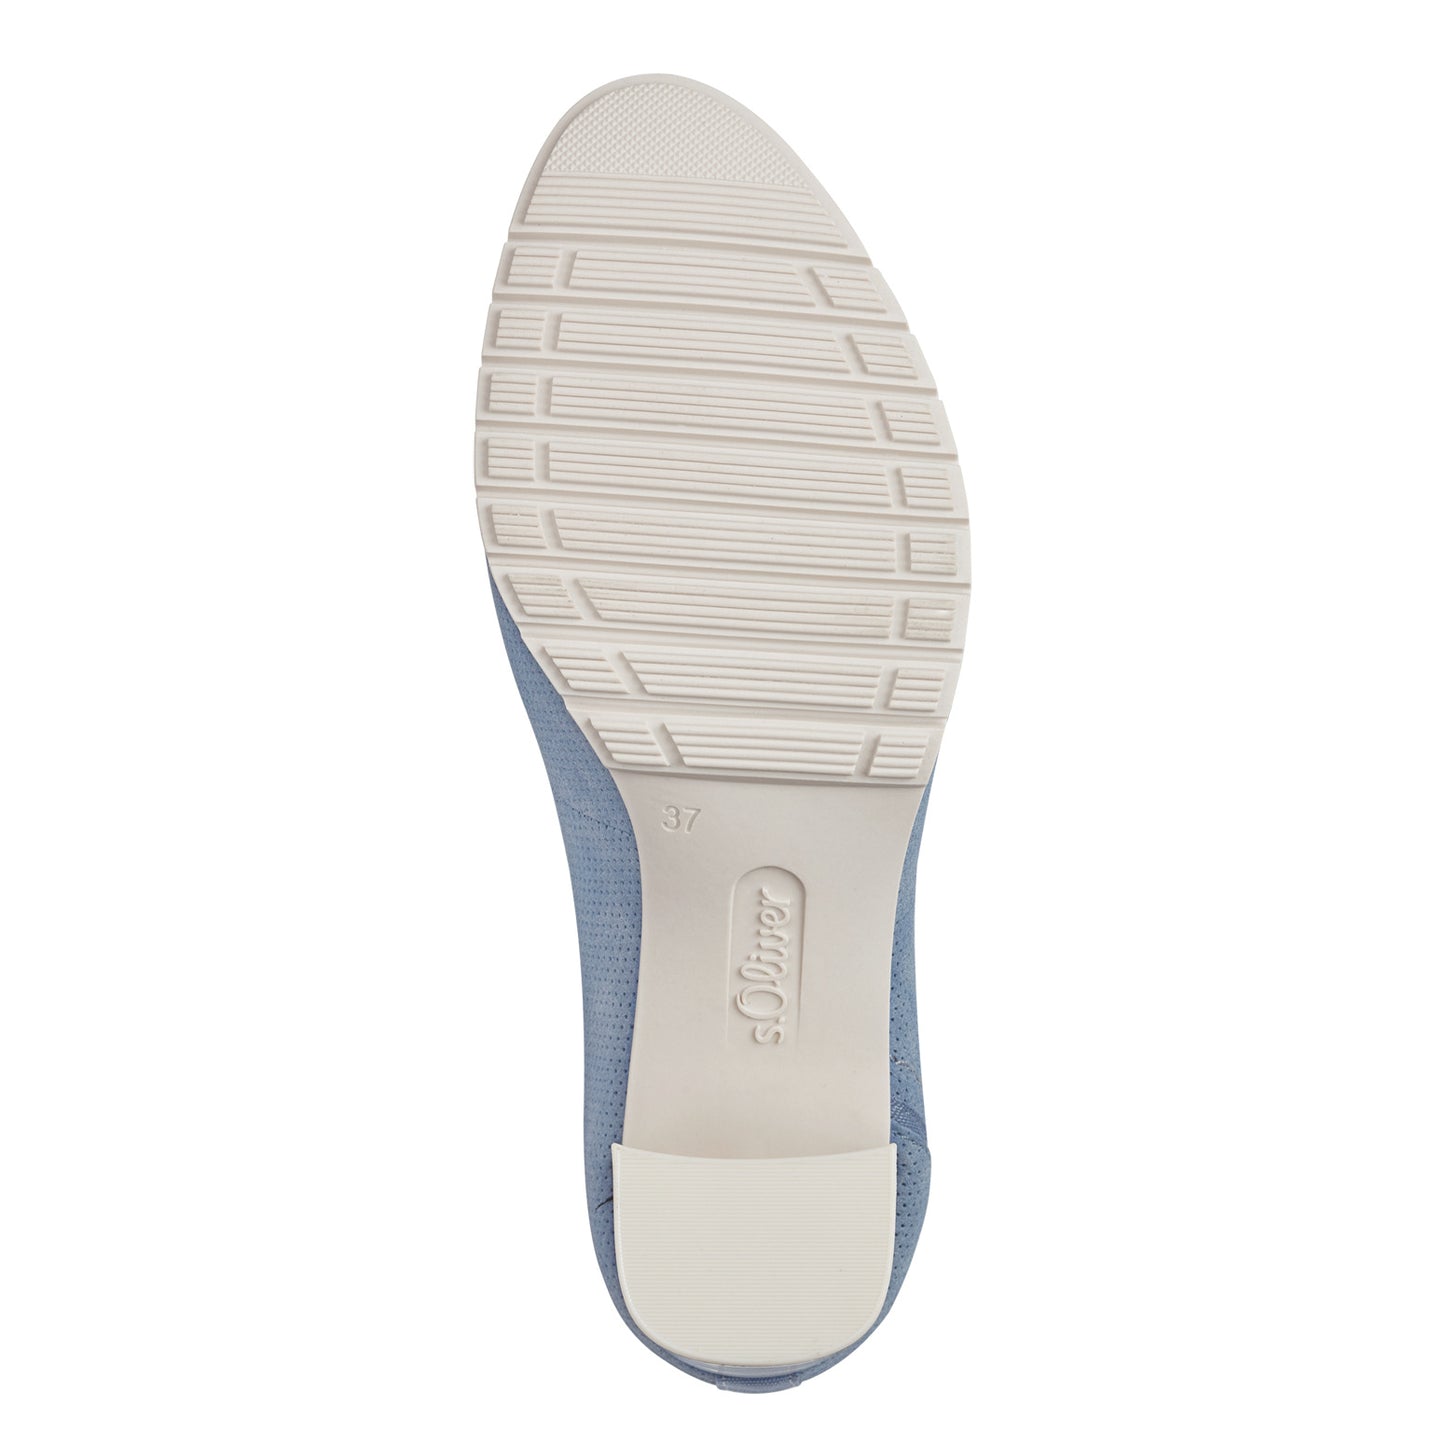 S Oliver 5-22402-42 860 Indigo Casual Shoes